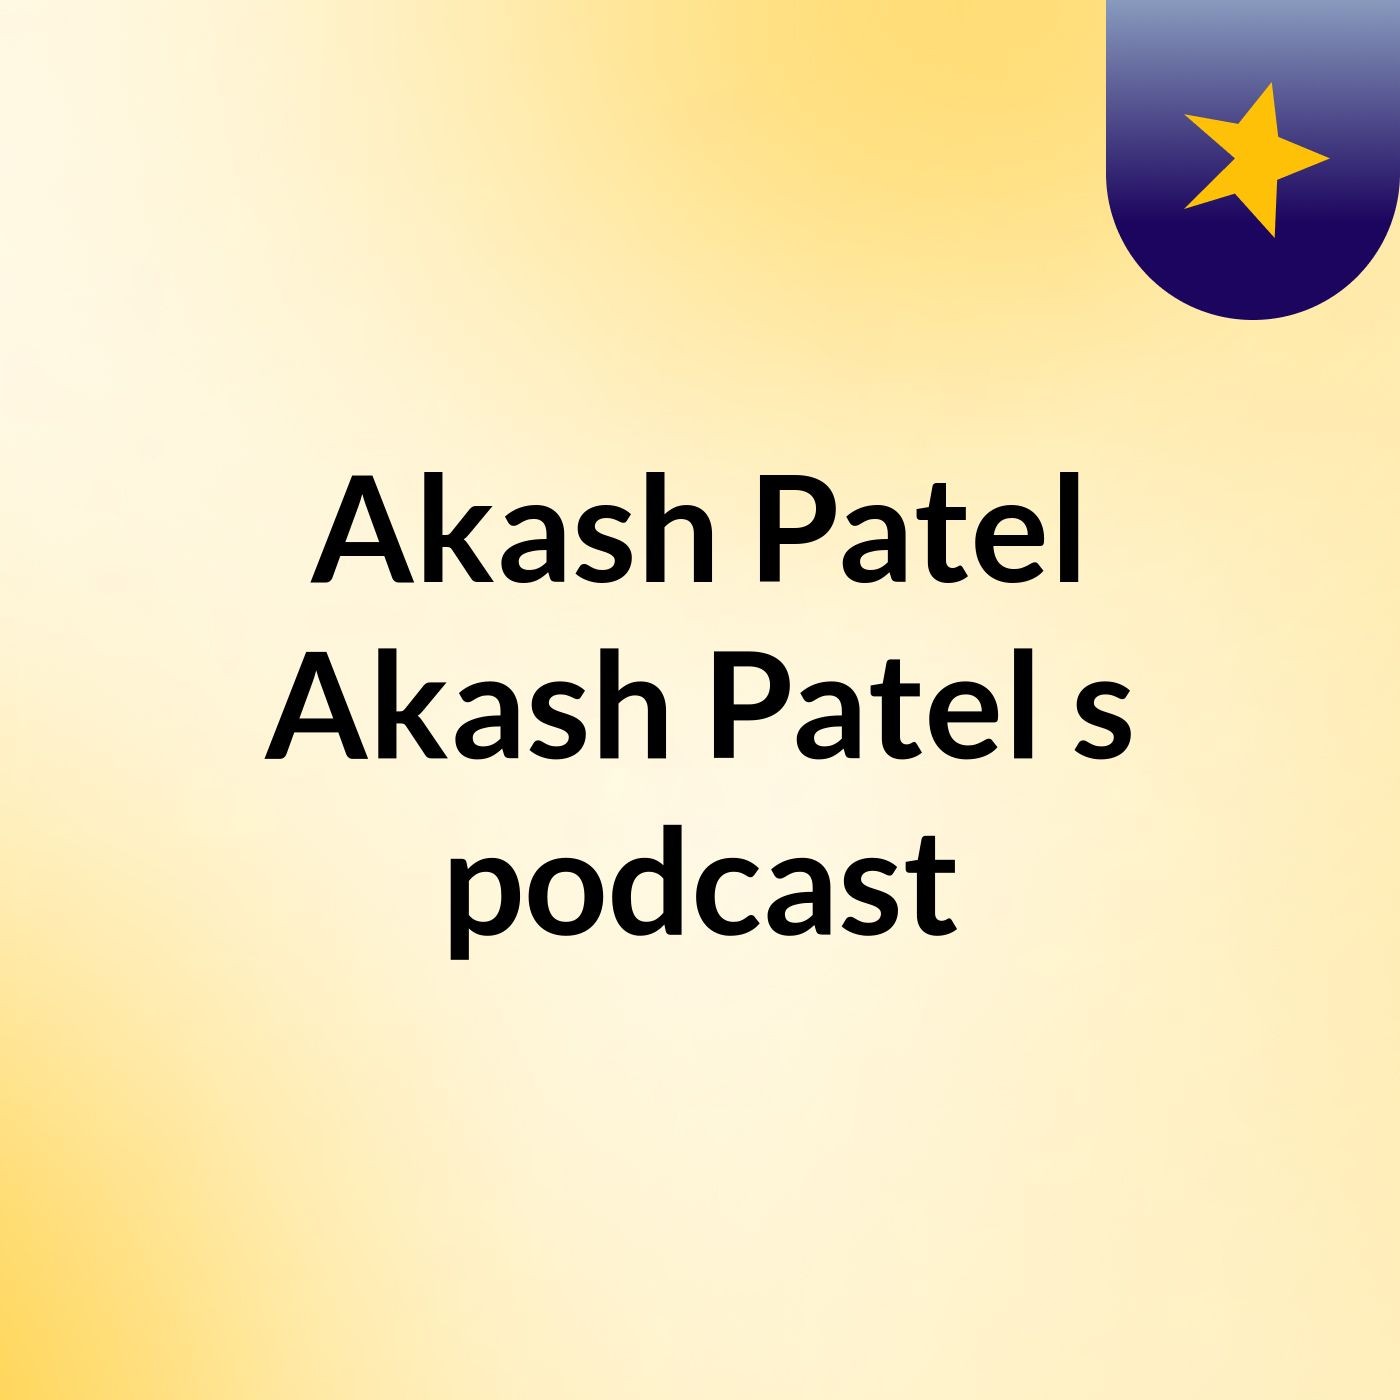 Akash Patel Akash Patel's podcast